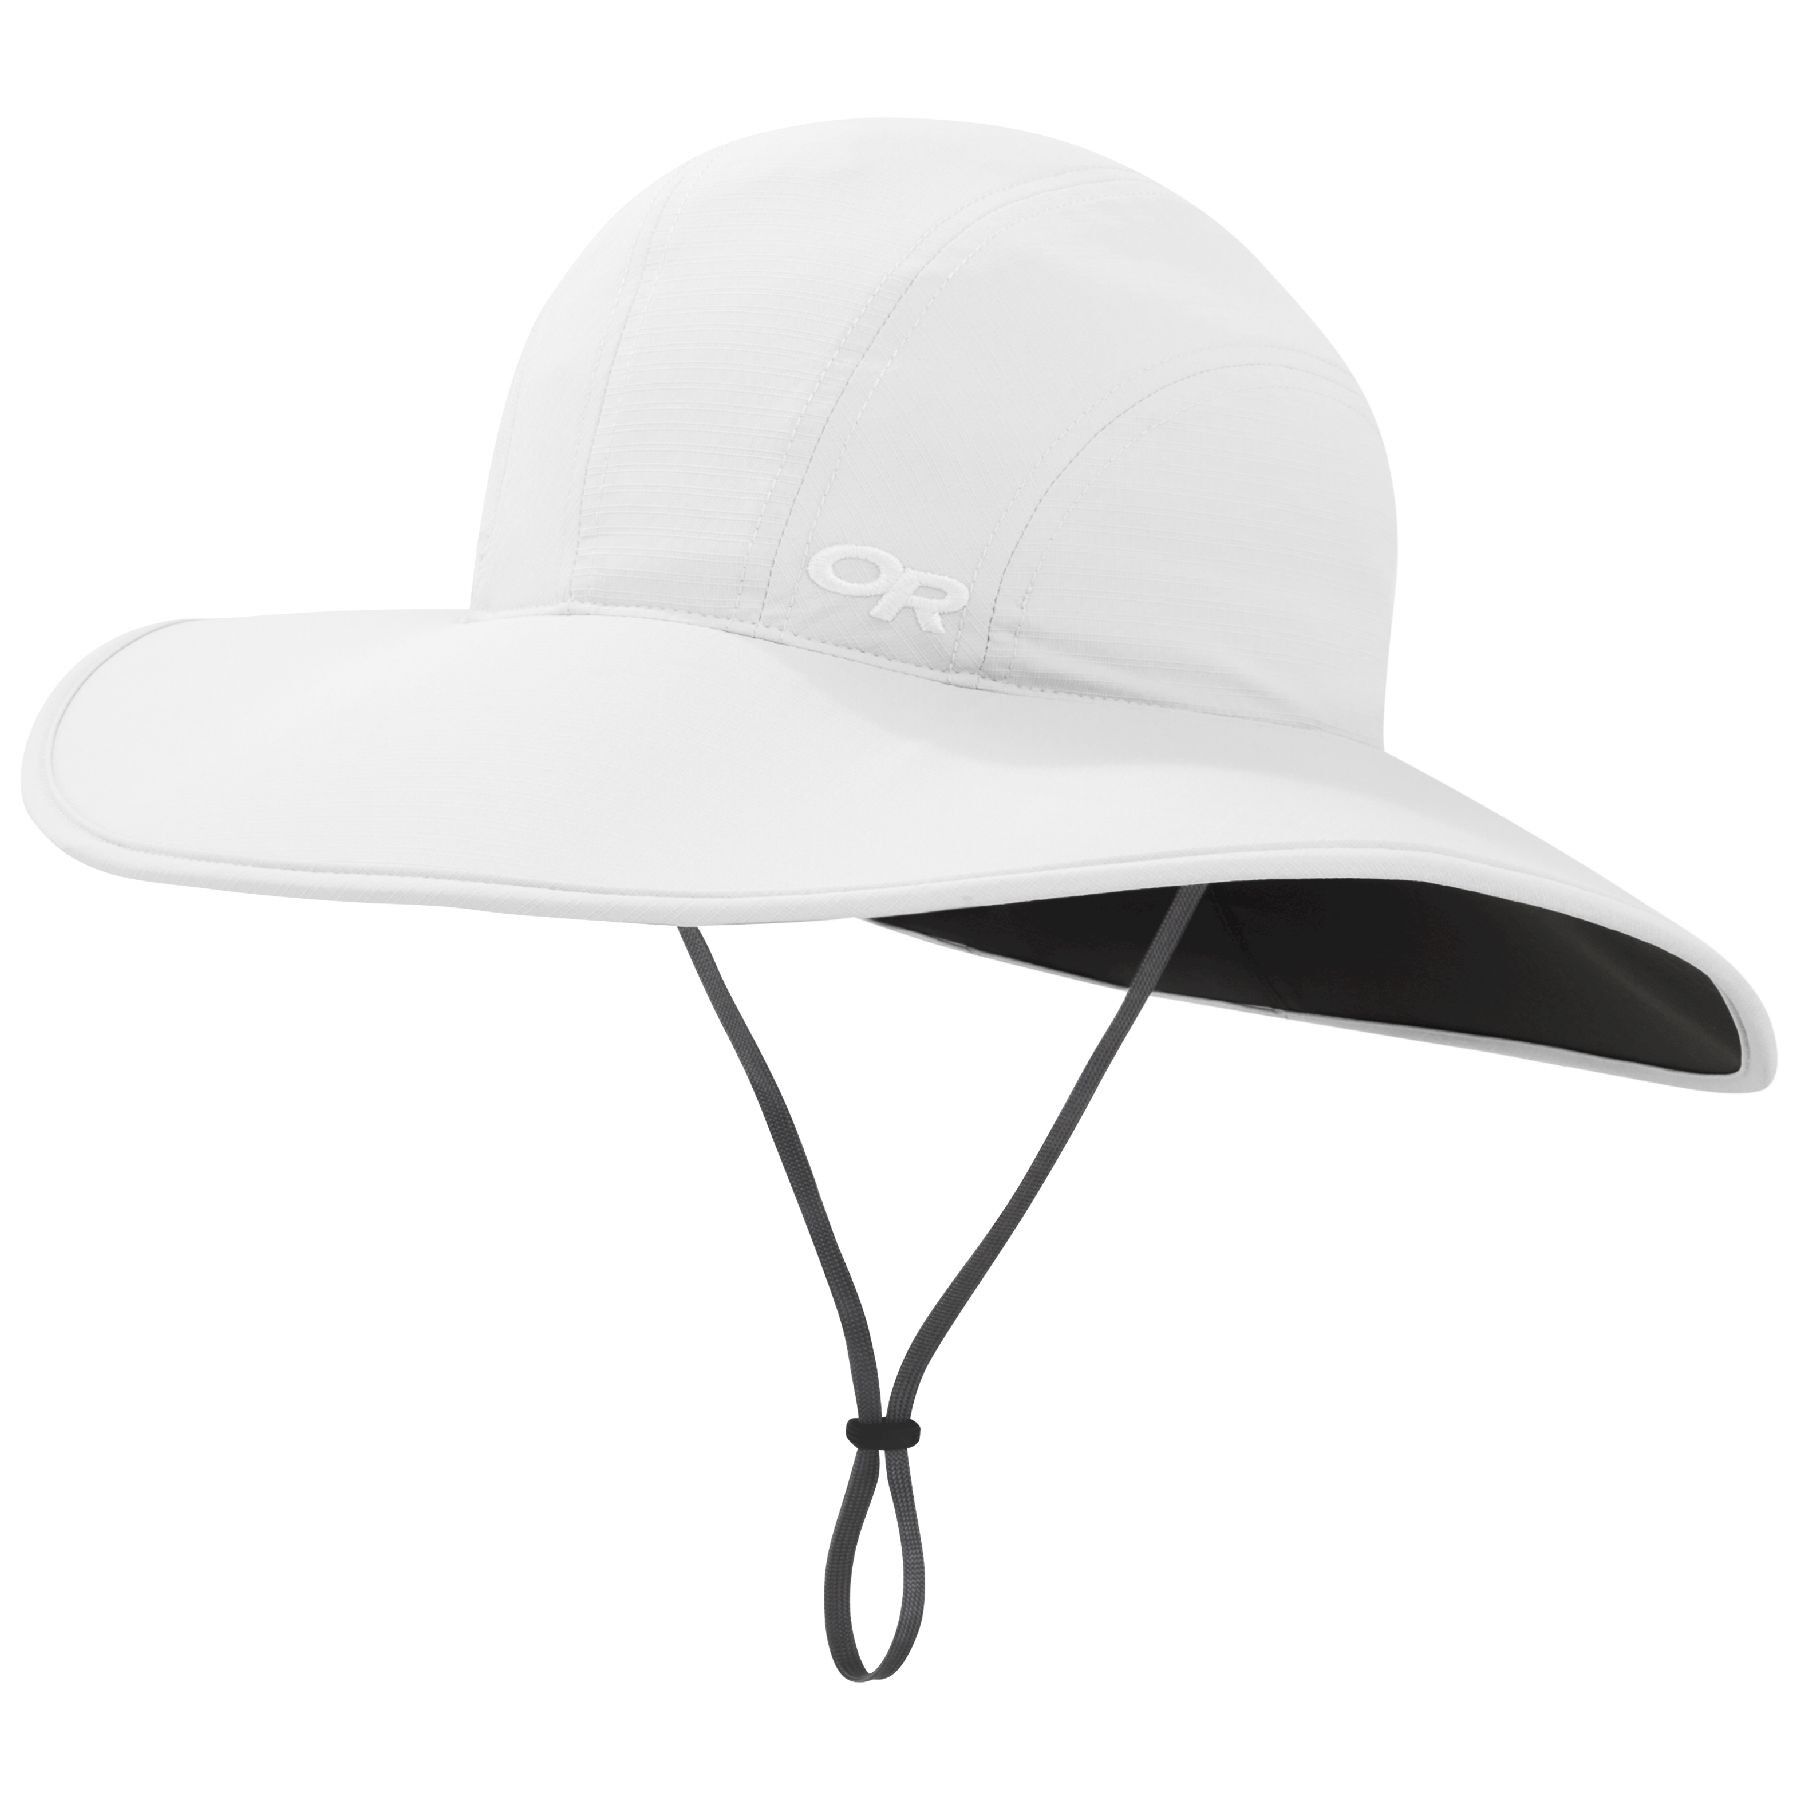 Outdoor Research Oasis Sun Sombrero - Hat